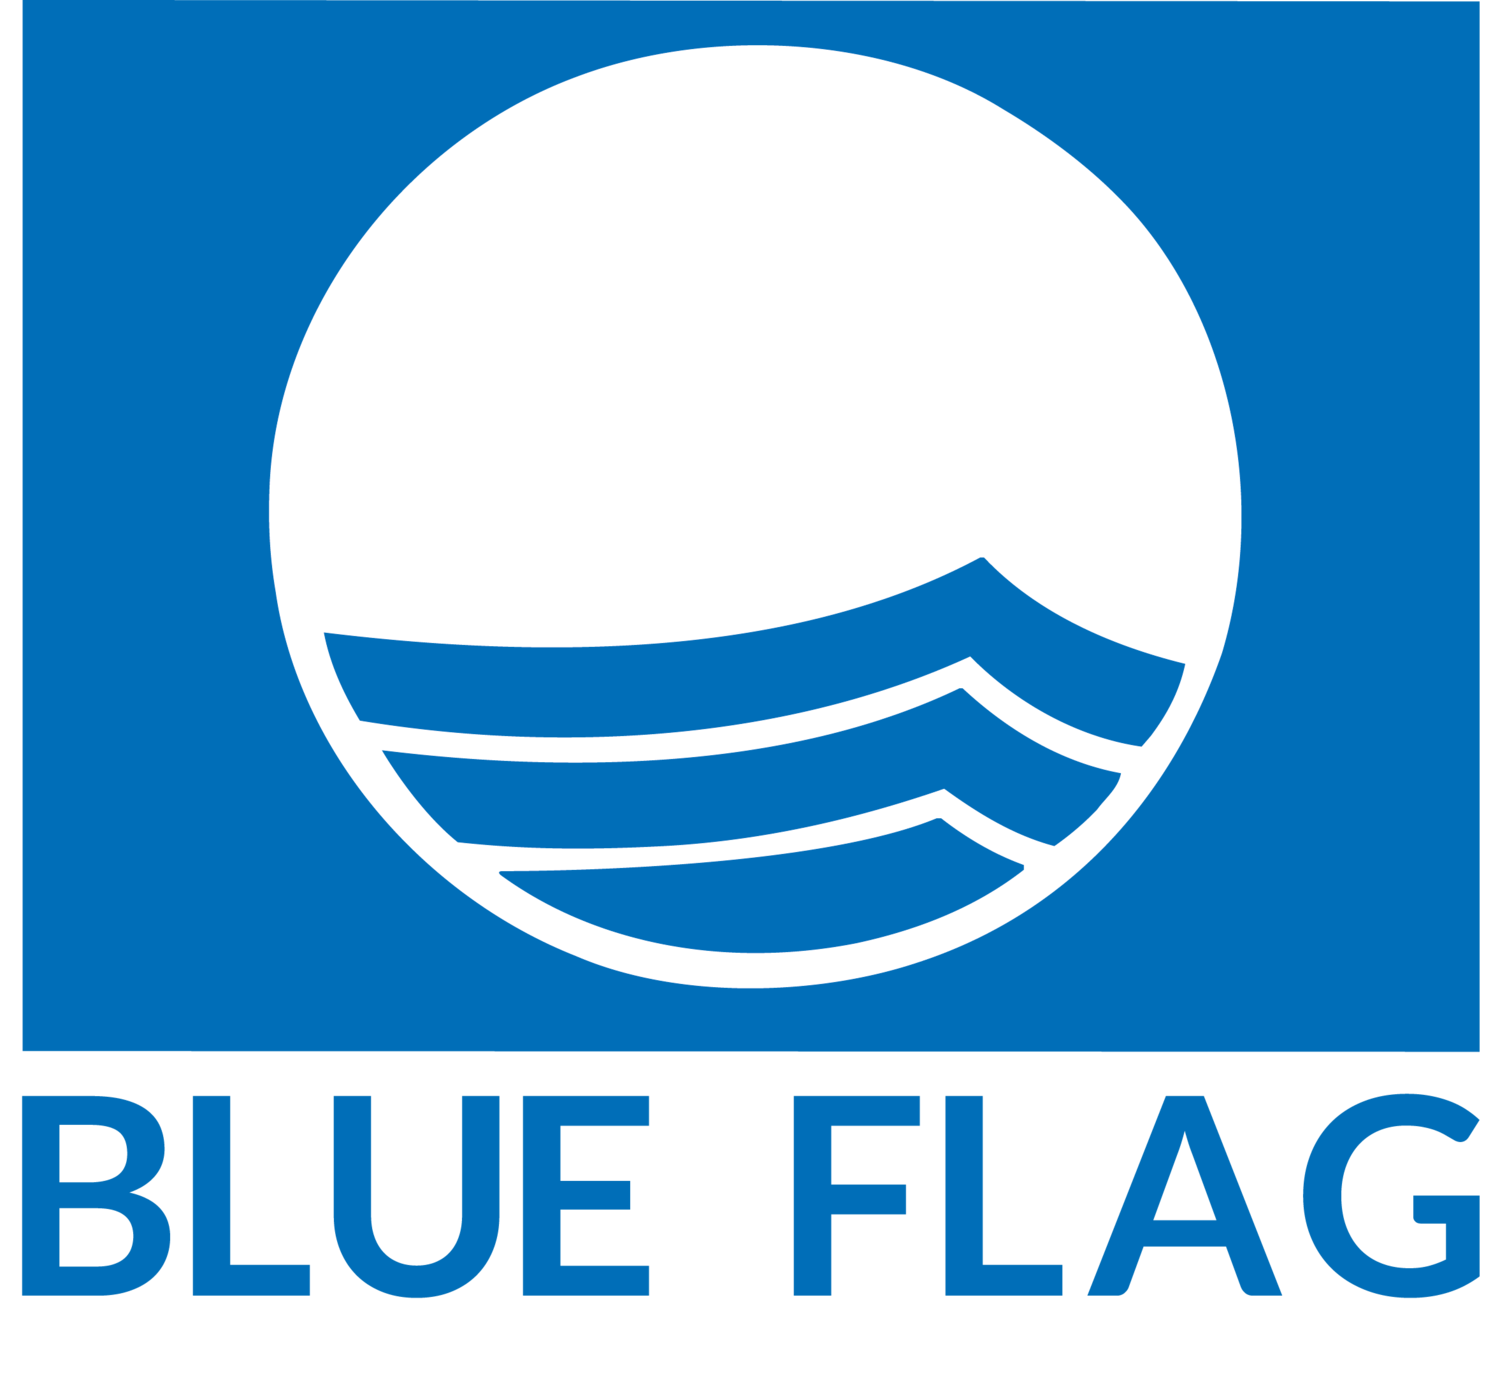 (c) Blueflag.global